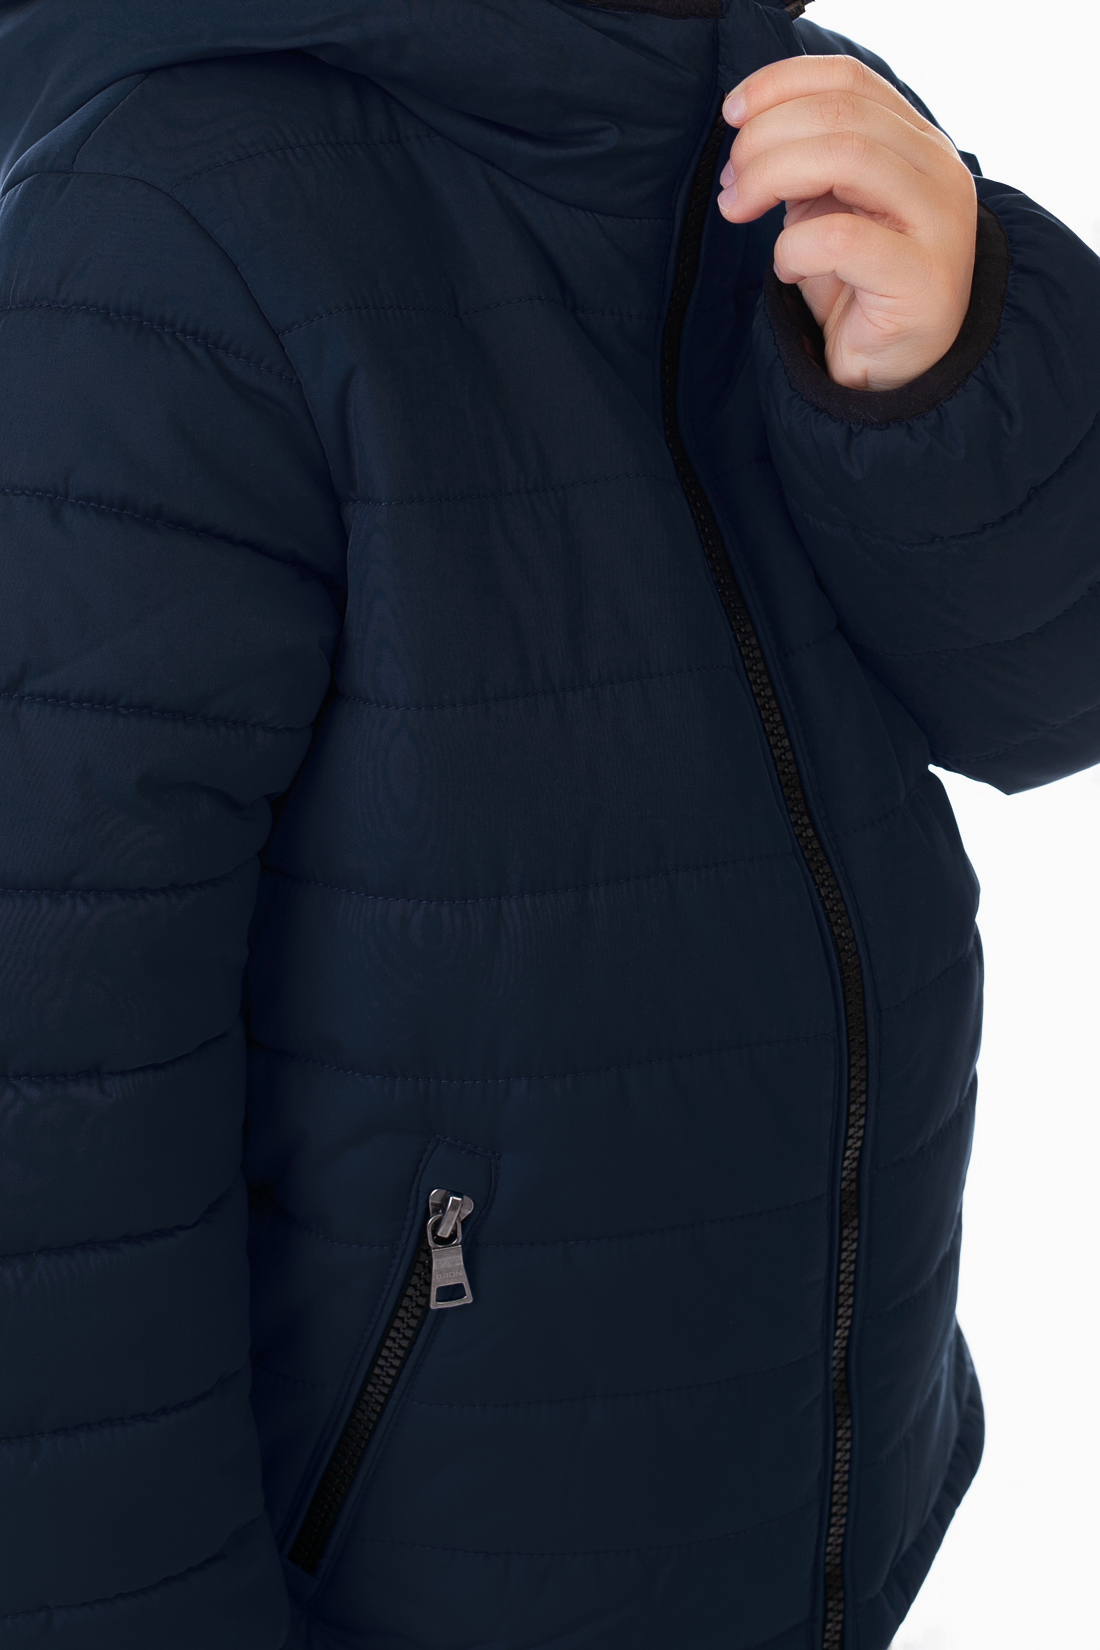 Куртка для мальчика (арт. baon BK538505), размер 110-116, цвет синий Куртка для мальчика (арт. baon BK538505) - фото 4